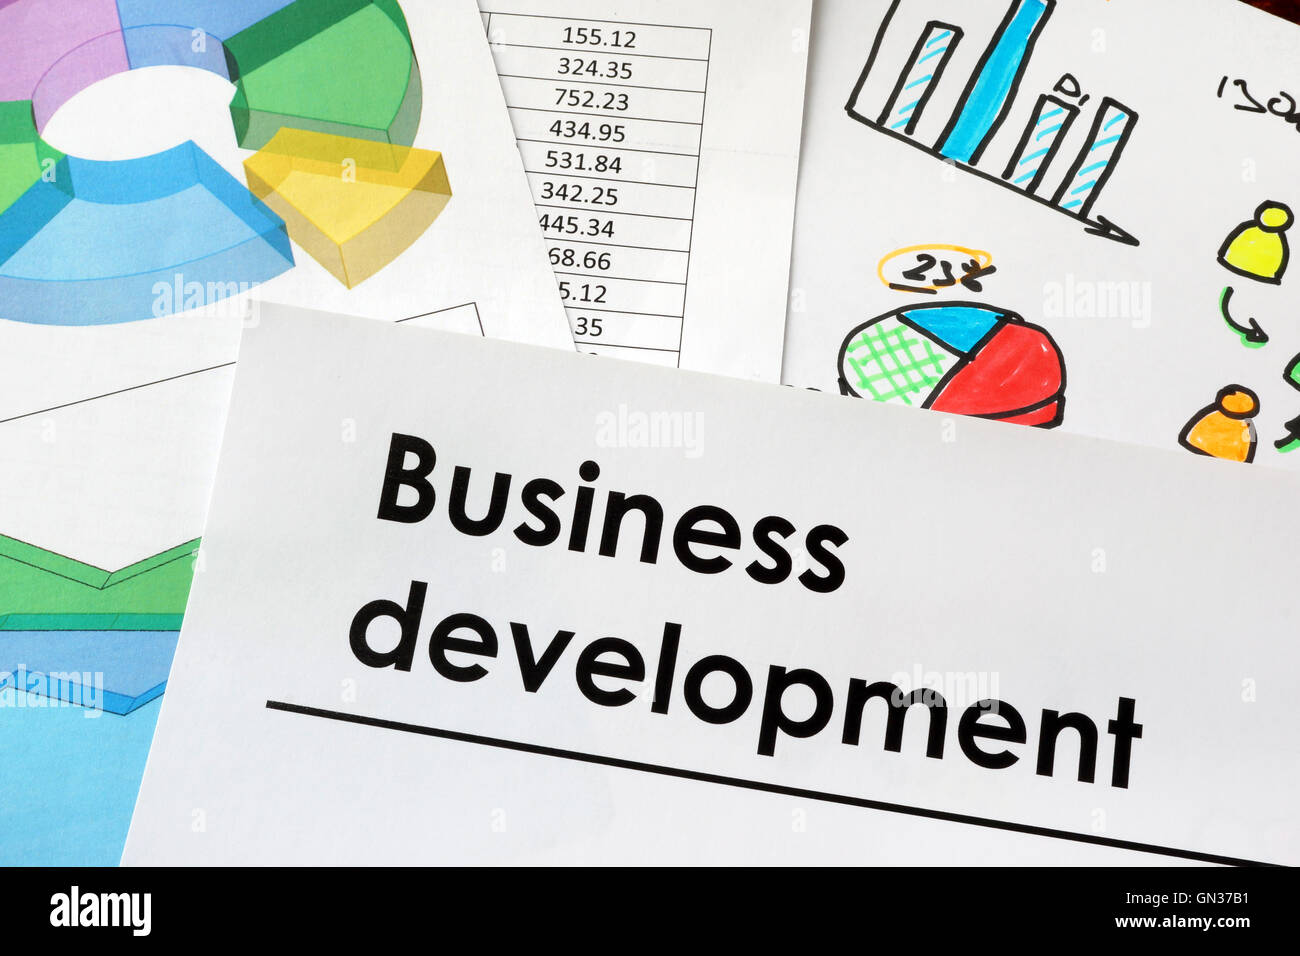 Business development sign written on a paper. Stock Photo